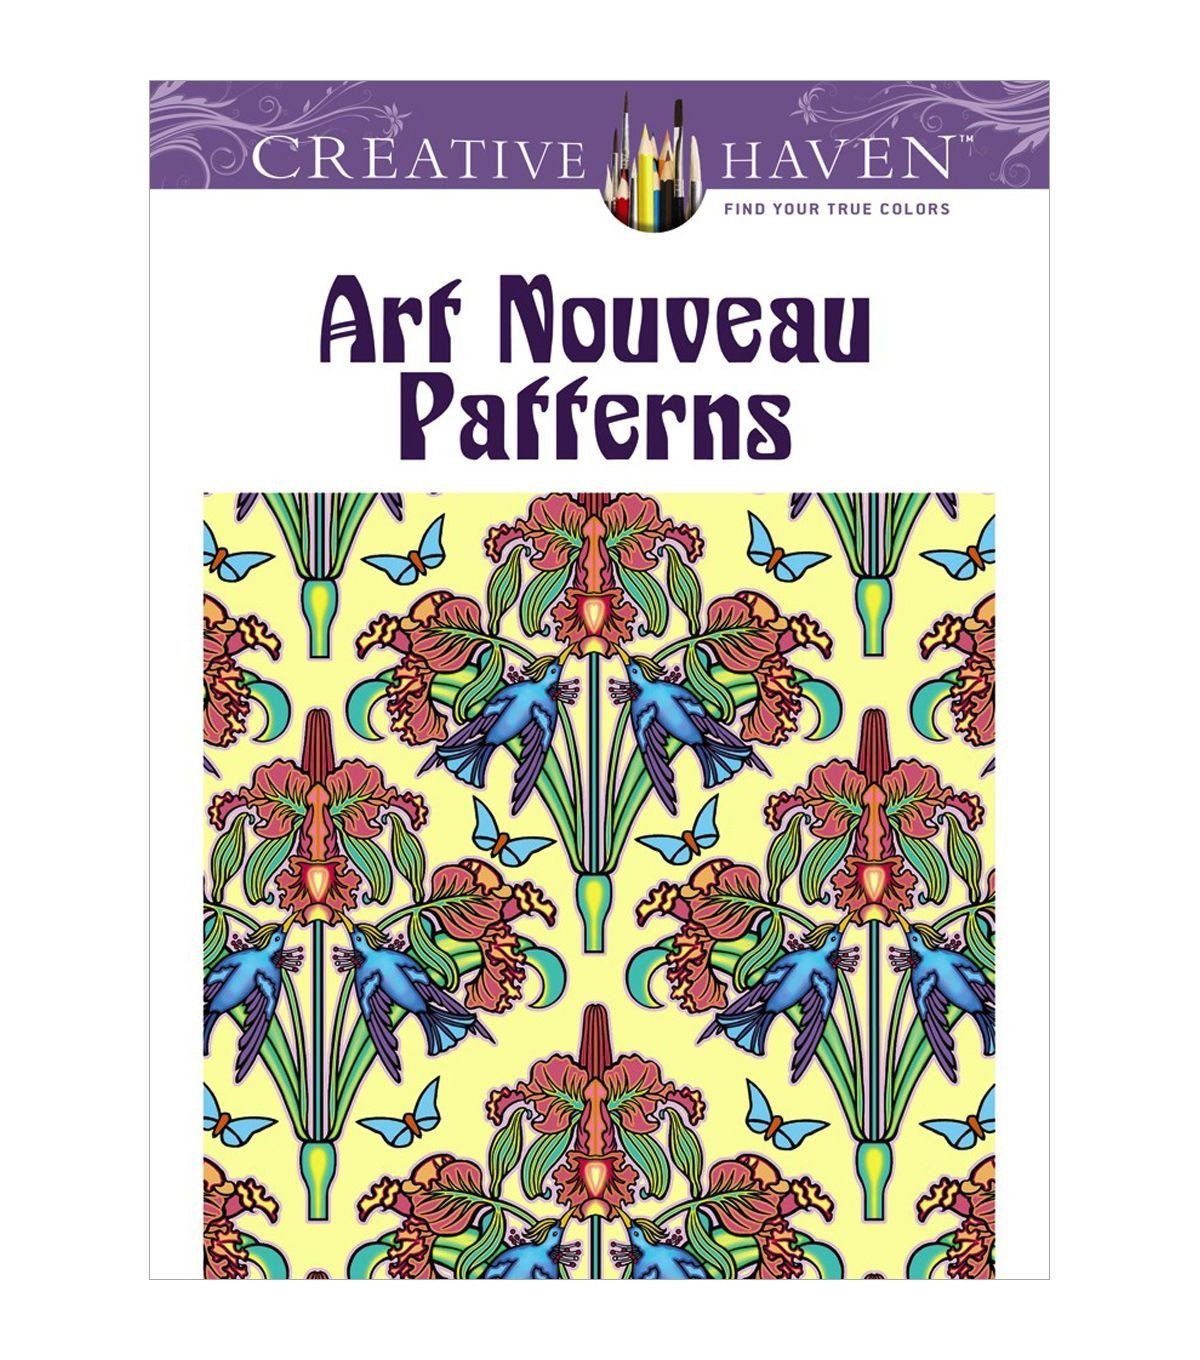 Joann Fabrics Adult Coloring Book
 Dover Creative Haven Art Nouveau Patterns Coloring Book